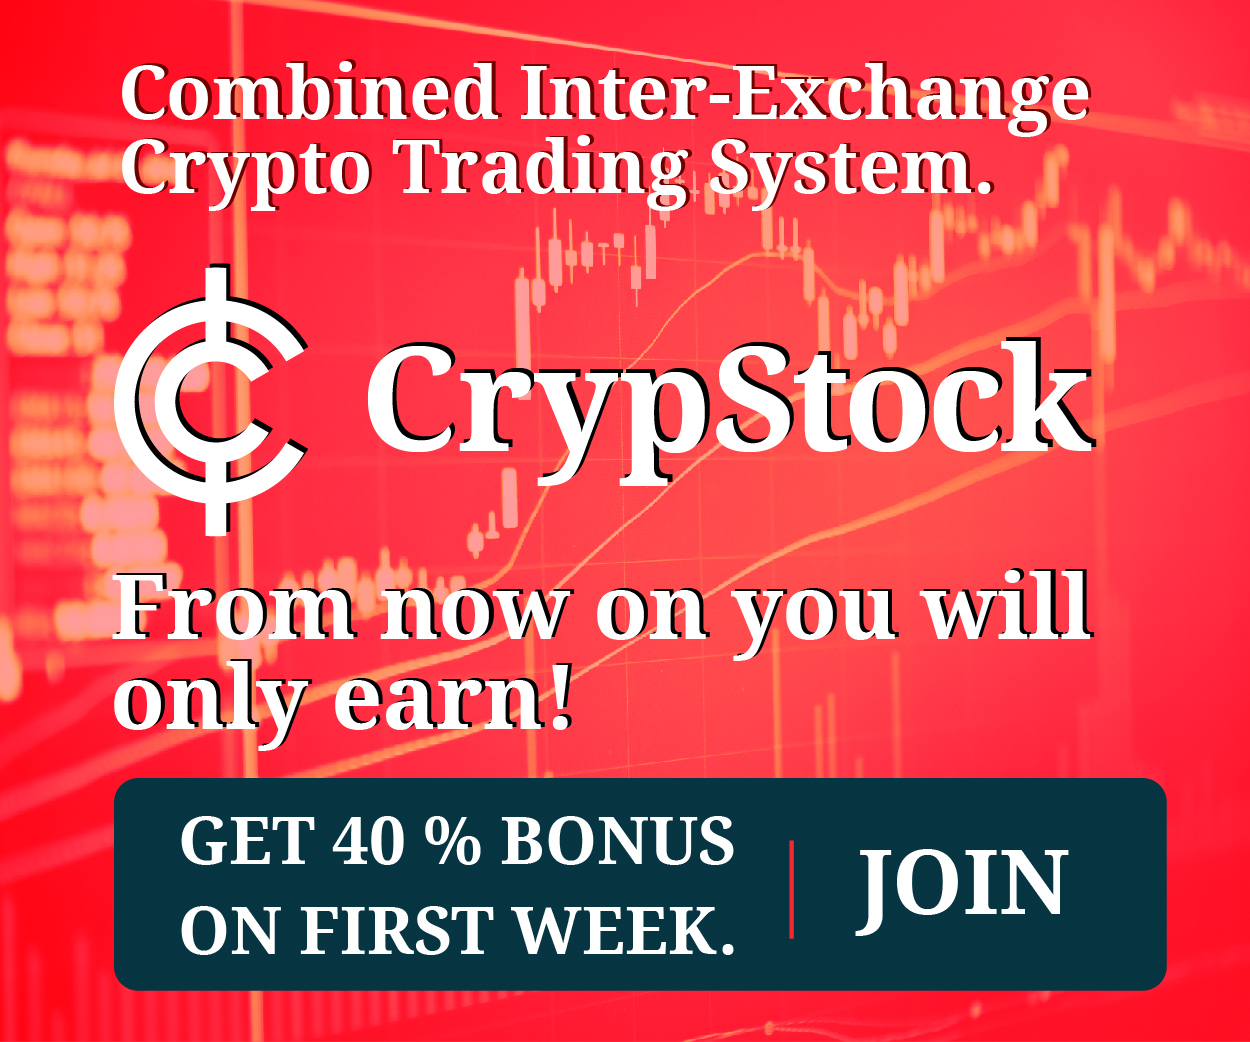 www.crypstock.io